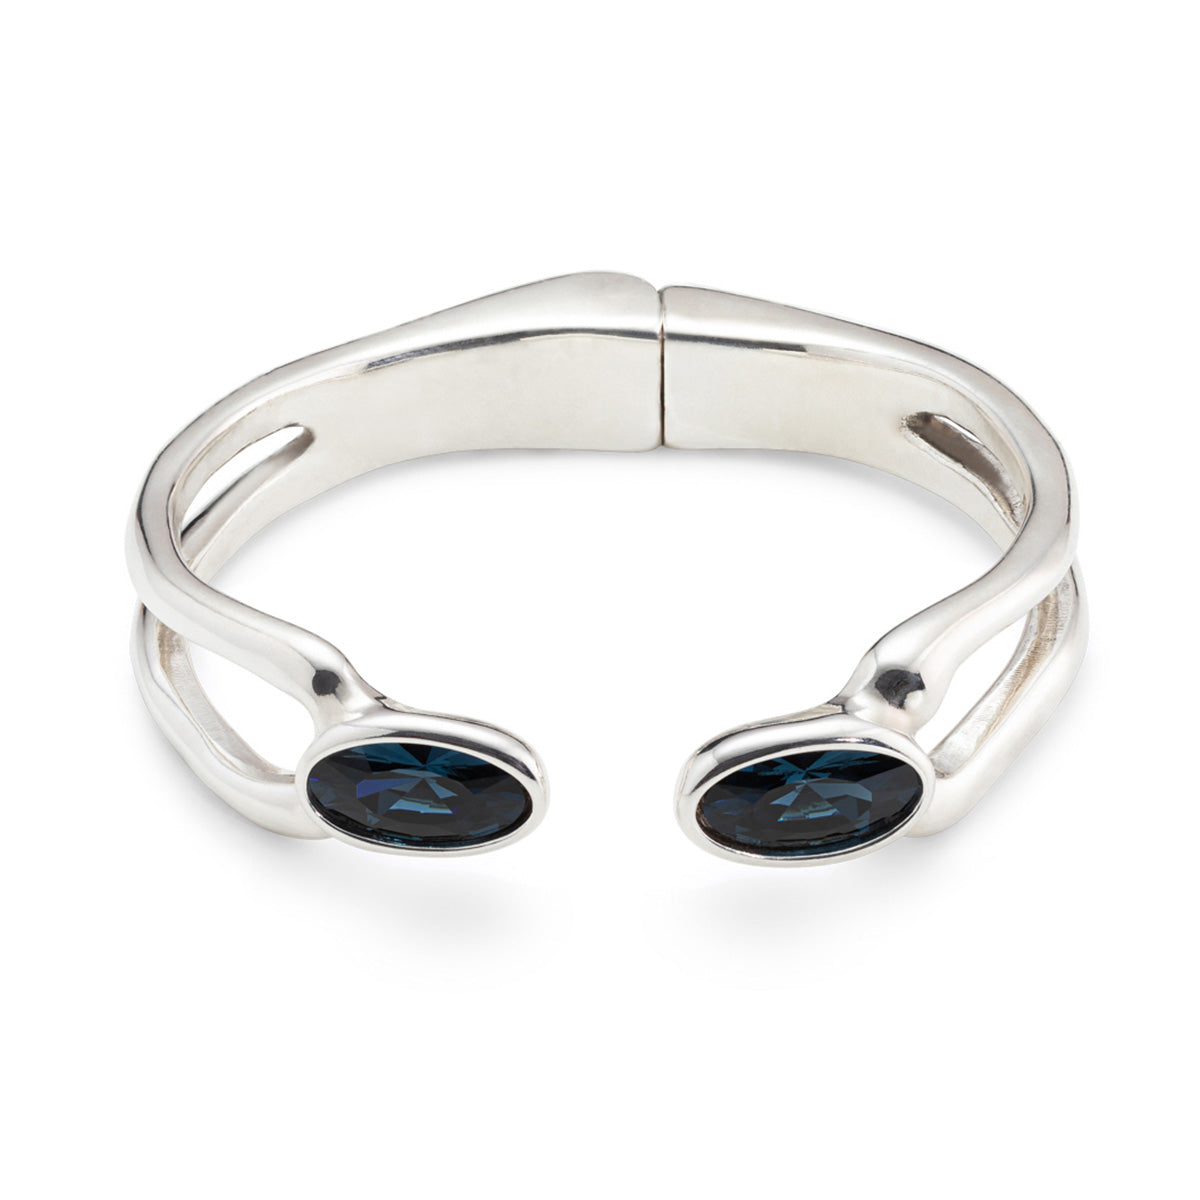 UNO- KINGDOM BRACELET. Silver-plated rigid hinged bracelet with blue crystals. L 17cm